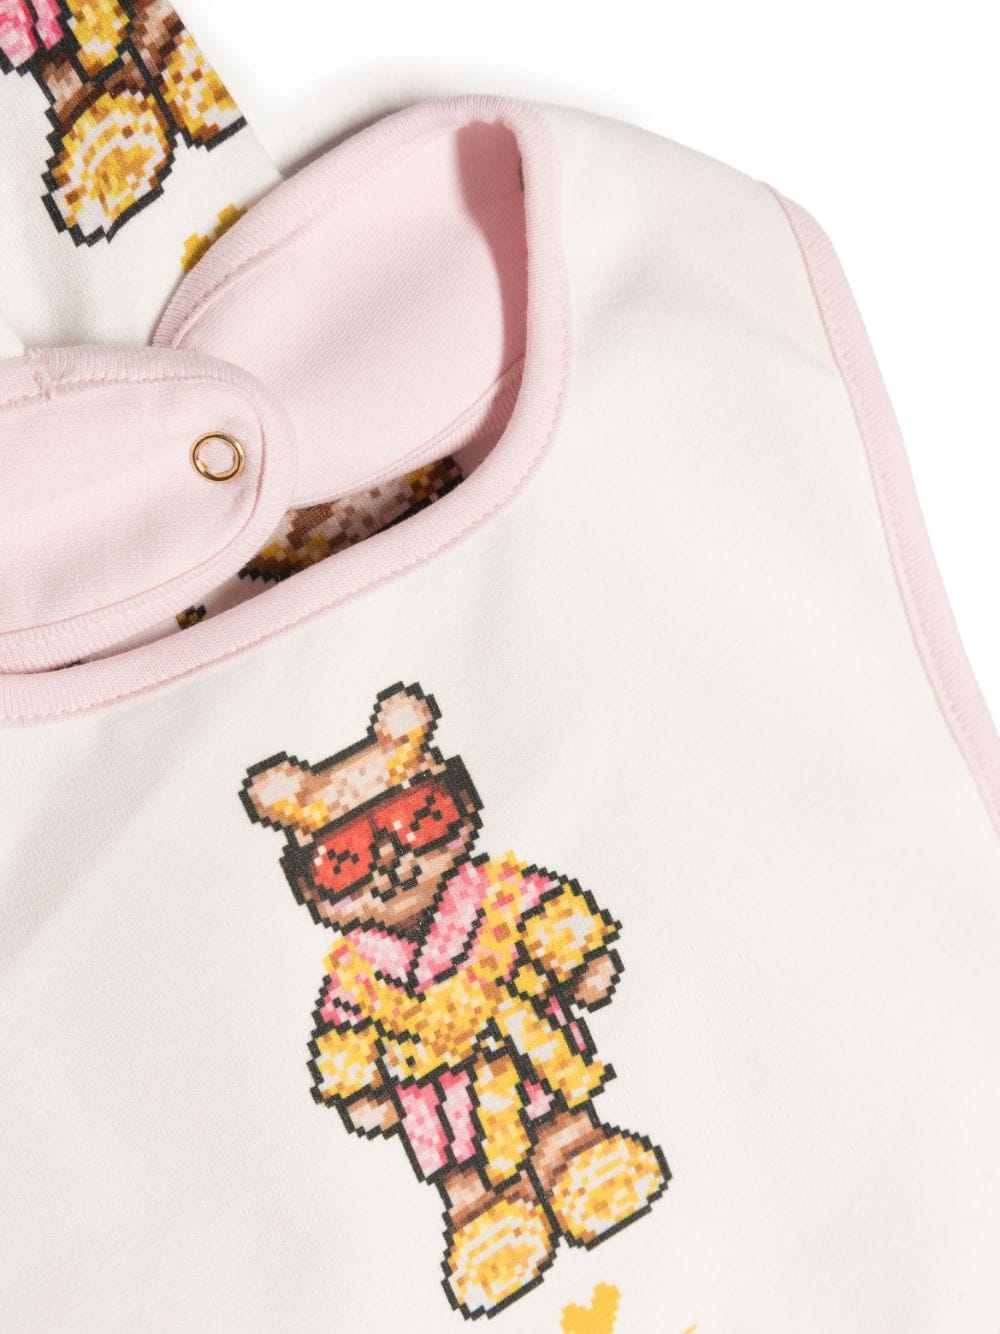 Printed cotton jersey baby girl VERSACE set with romper and bib | Carofiglio Junior